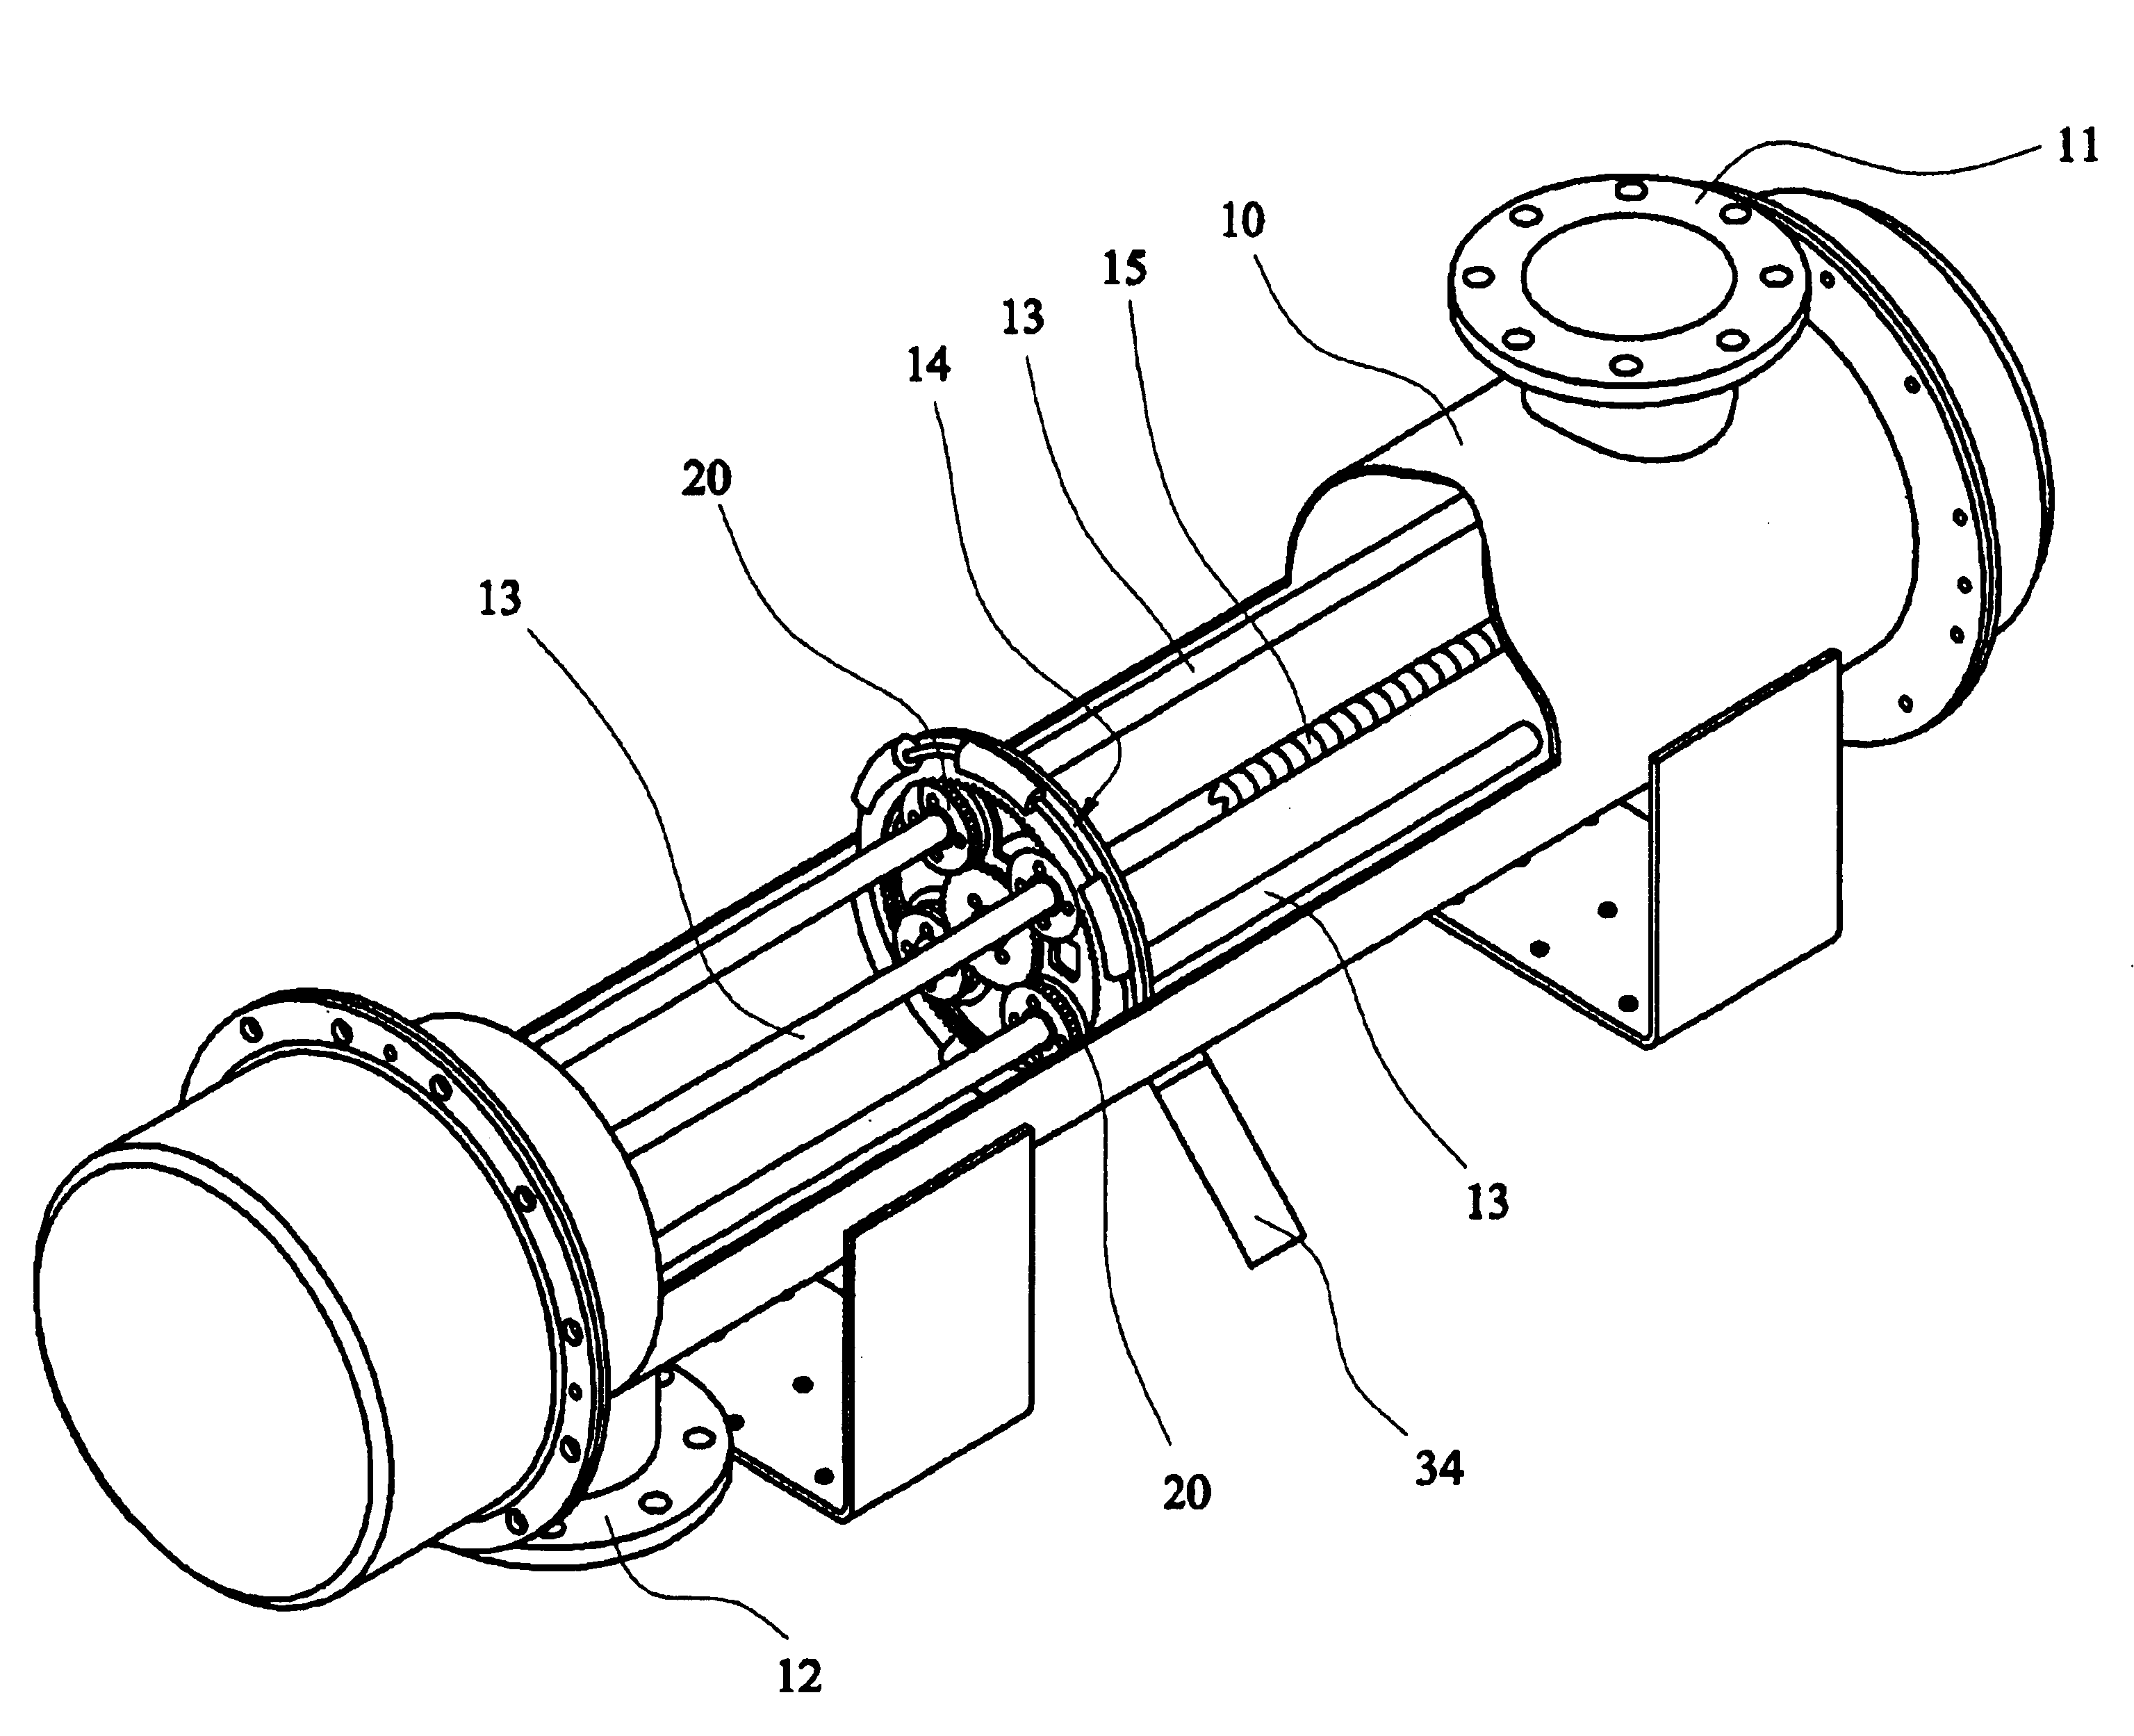 Fluid treatment apparatus